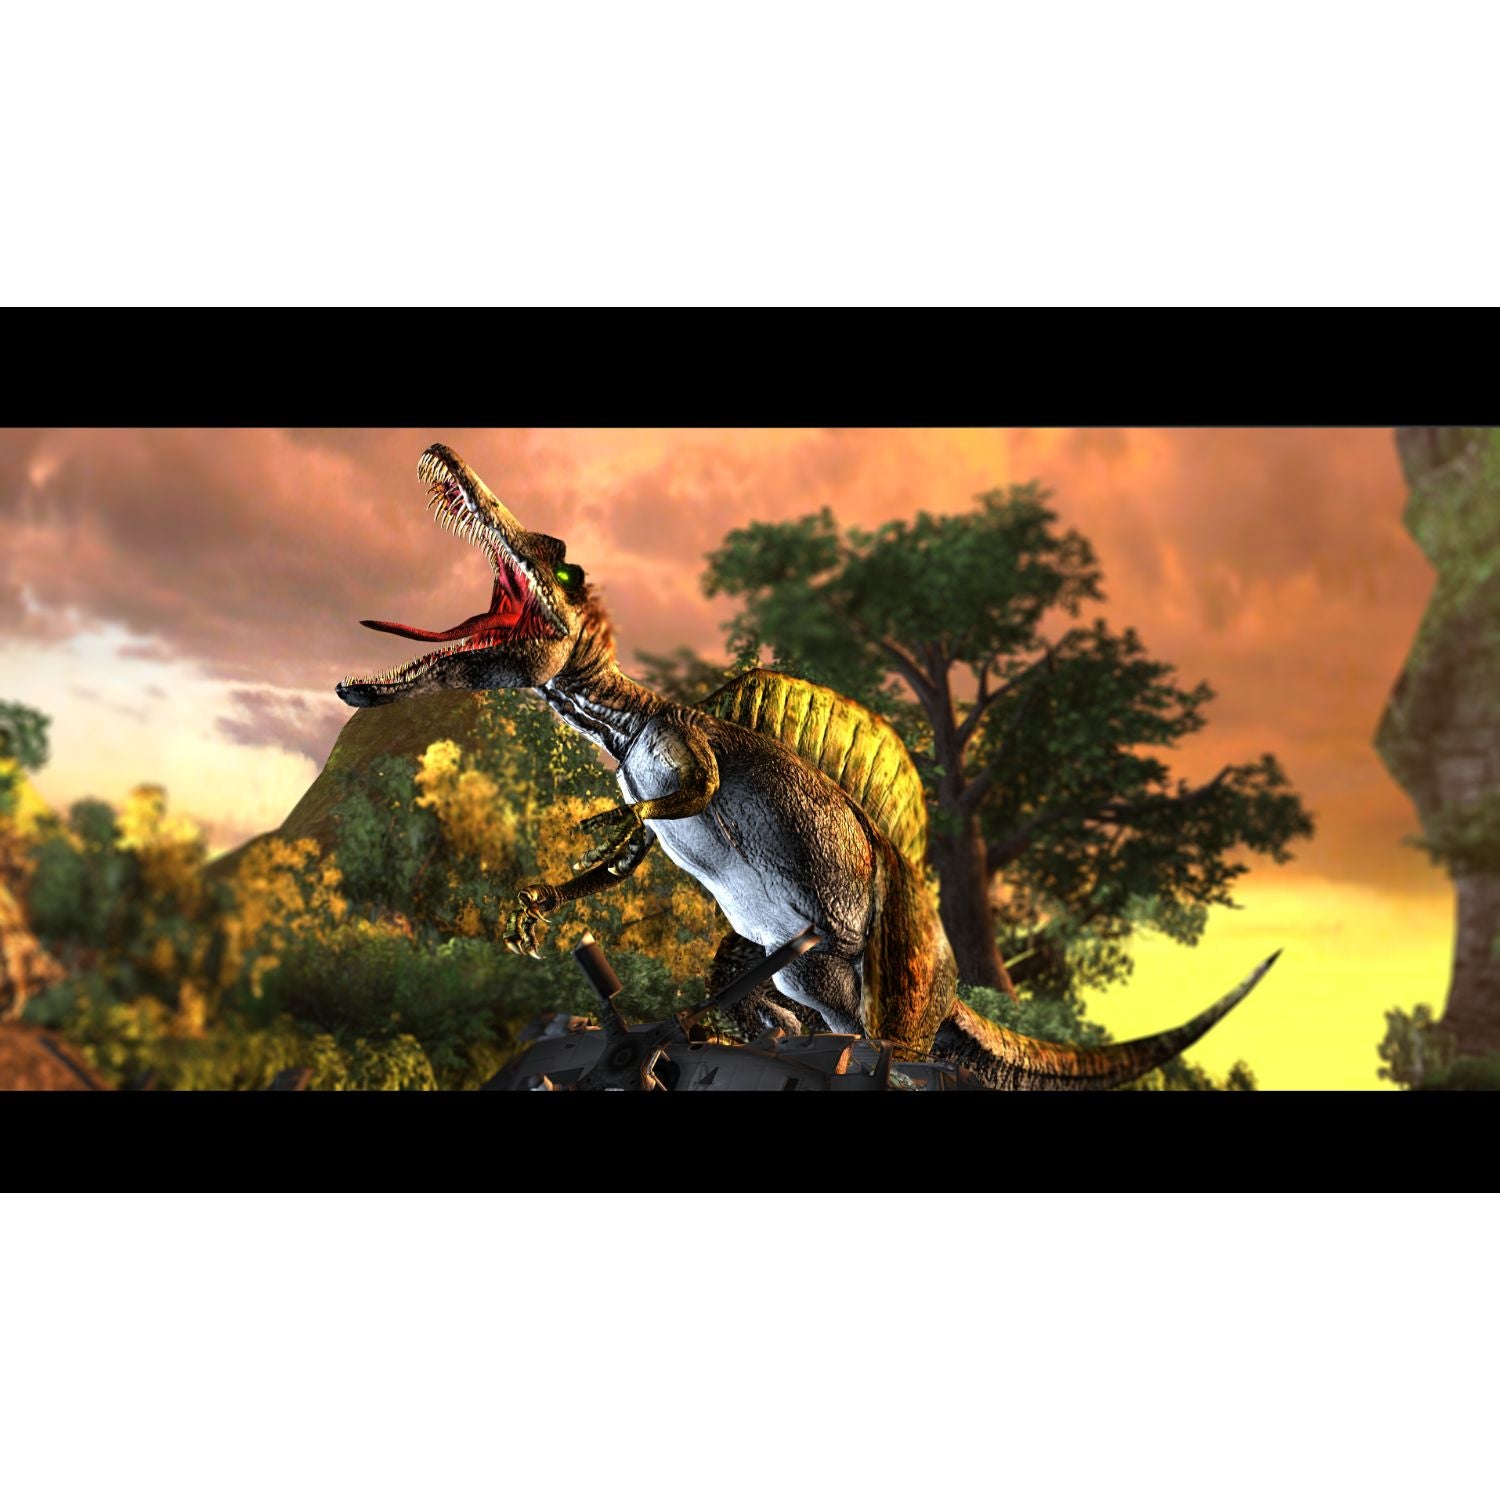 Raw Thrills Jurassic Park Arcade Game - Gaming Blaze